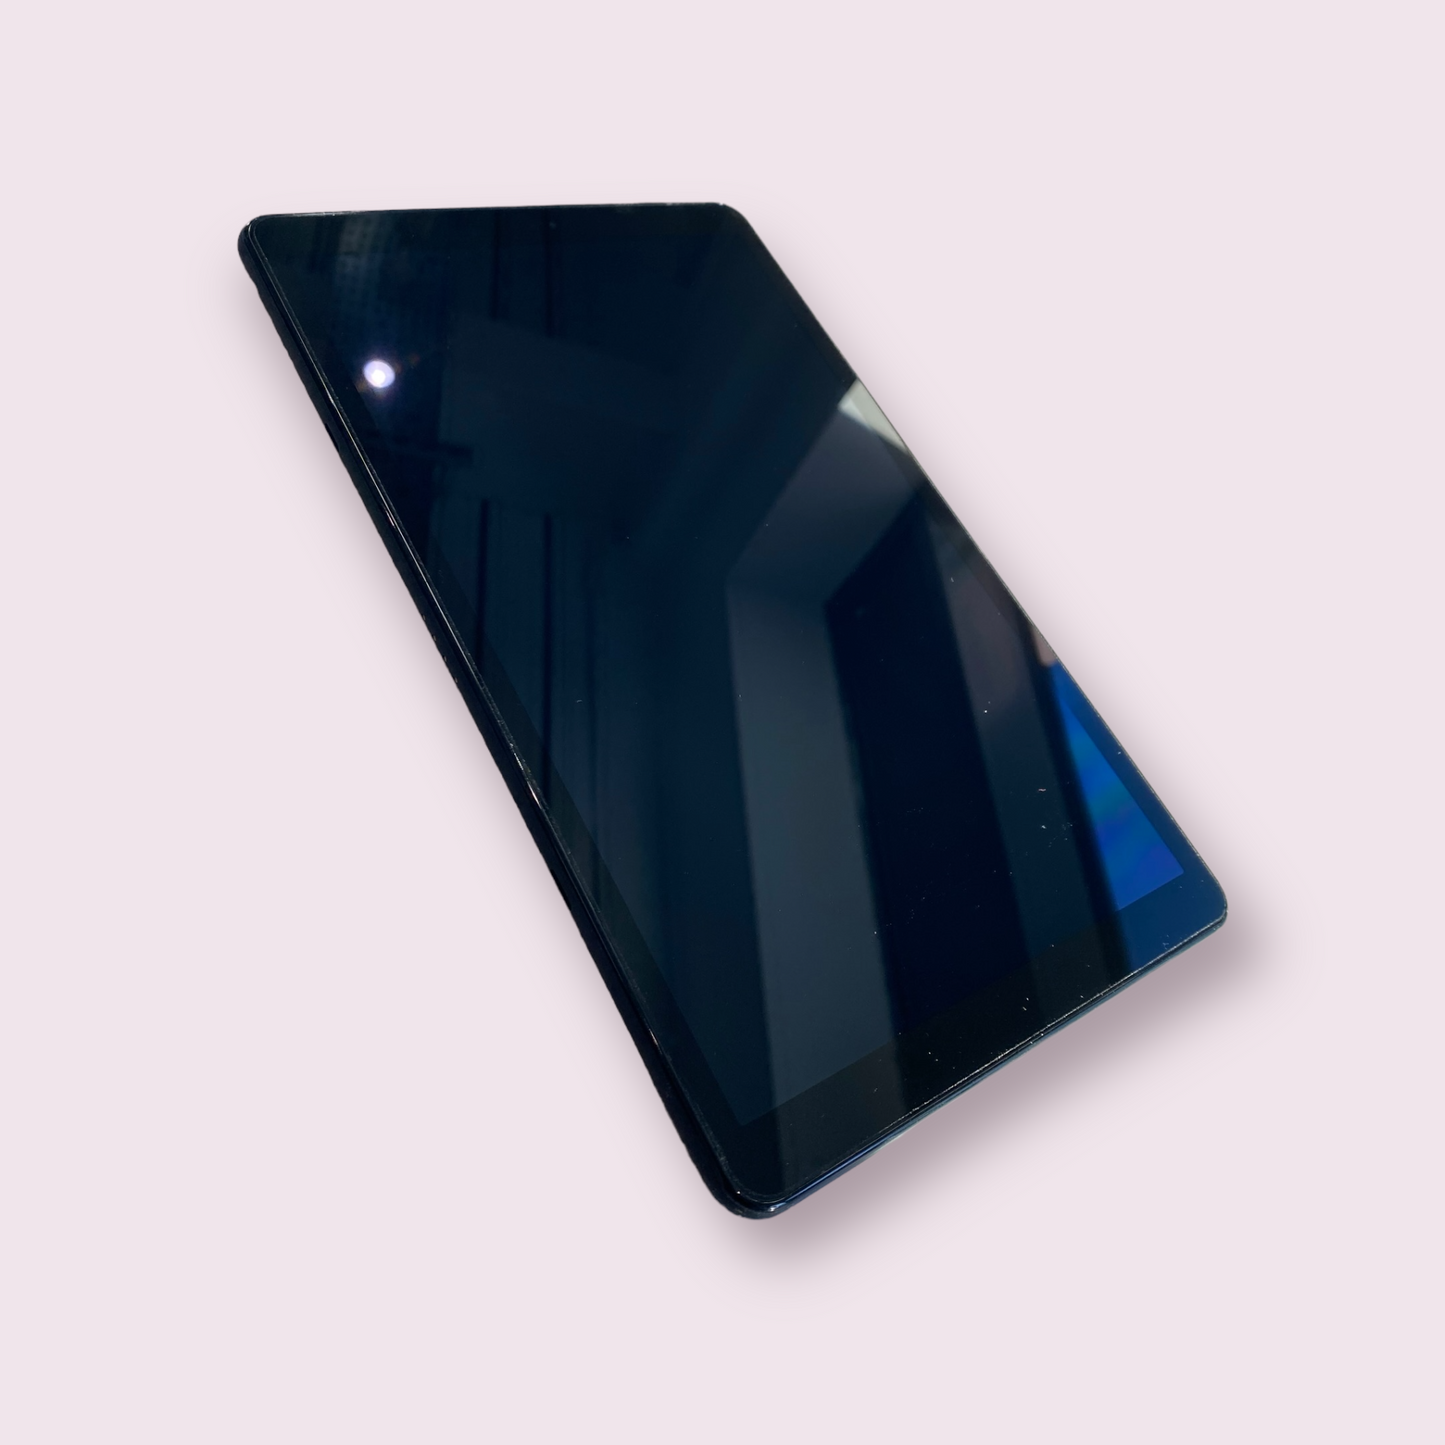 Samsung Galaxy TAB A 10.5 32GB black Tablet - Unlocked - Grade B